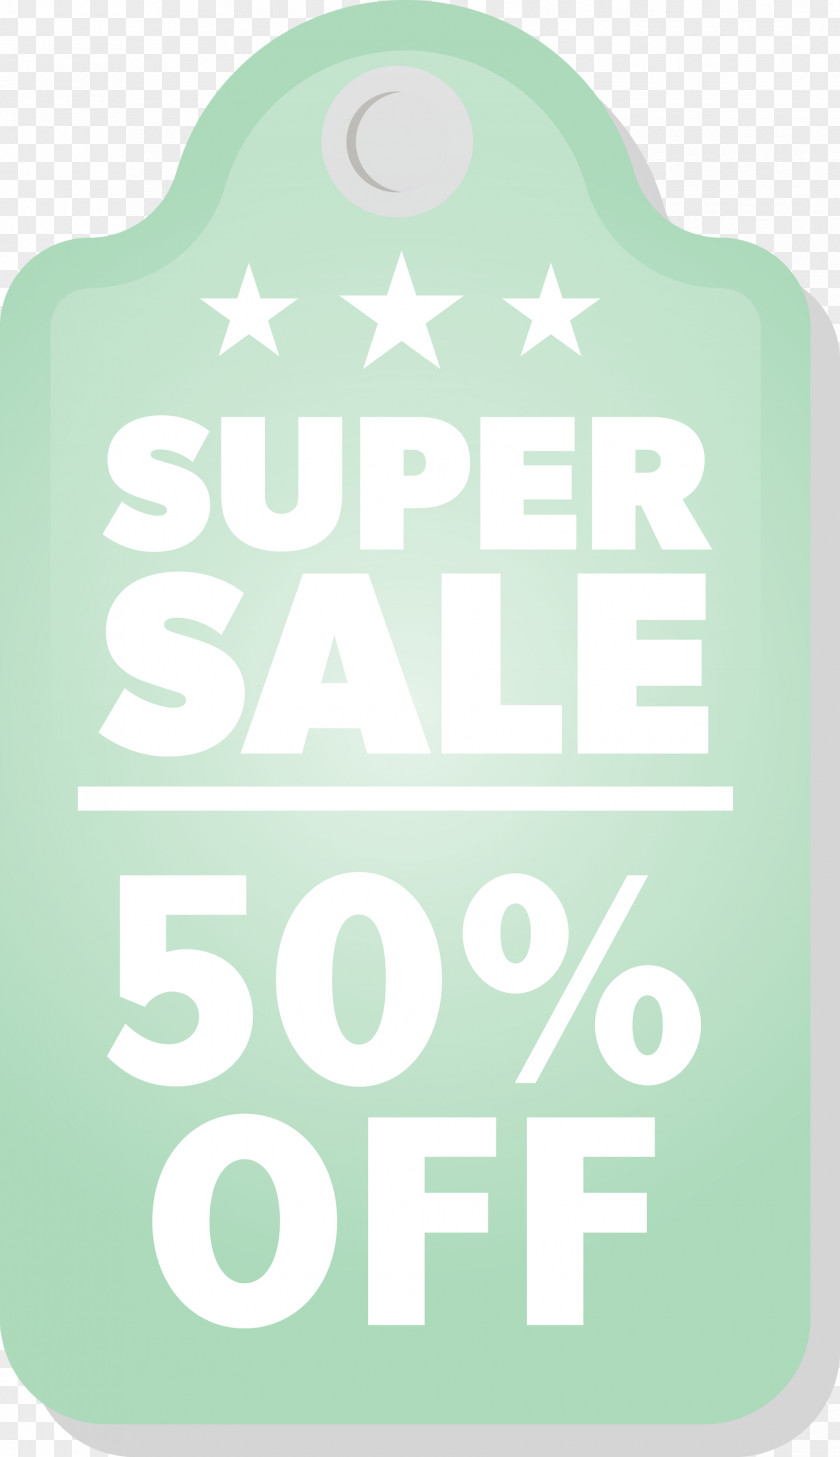 Super Sale Discount Sales PNG